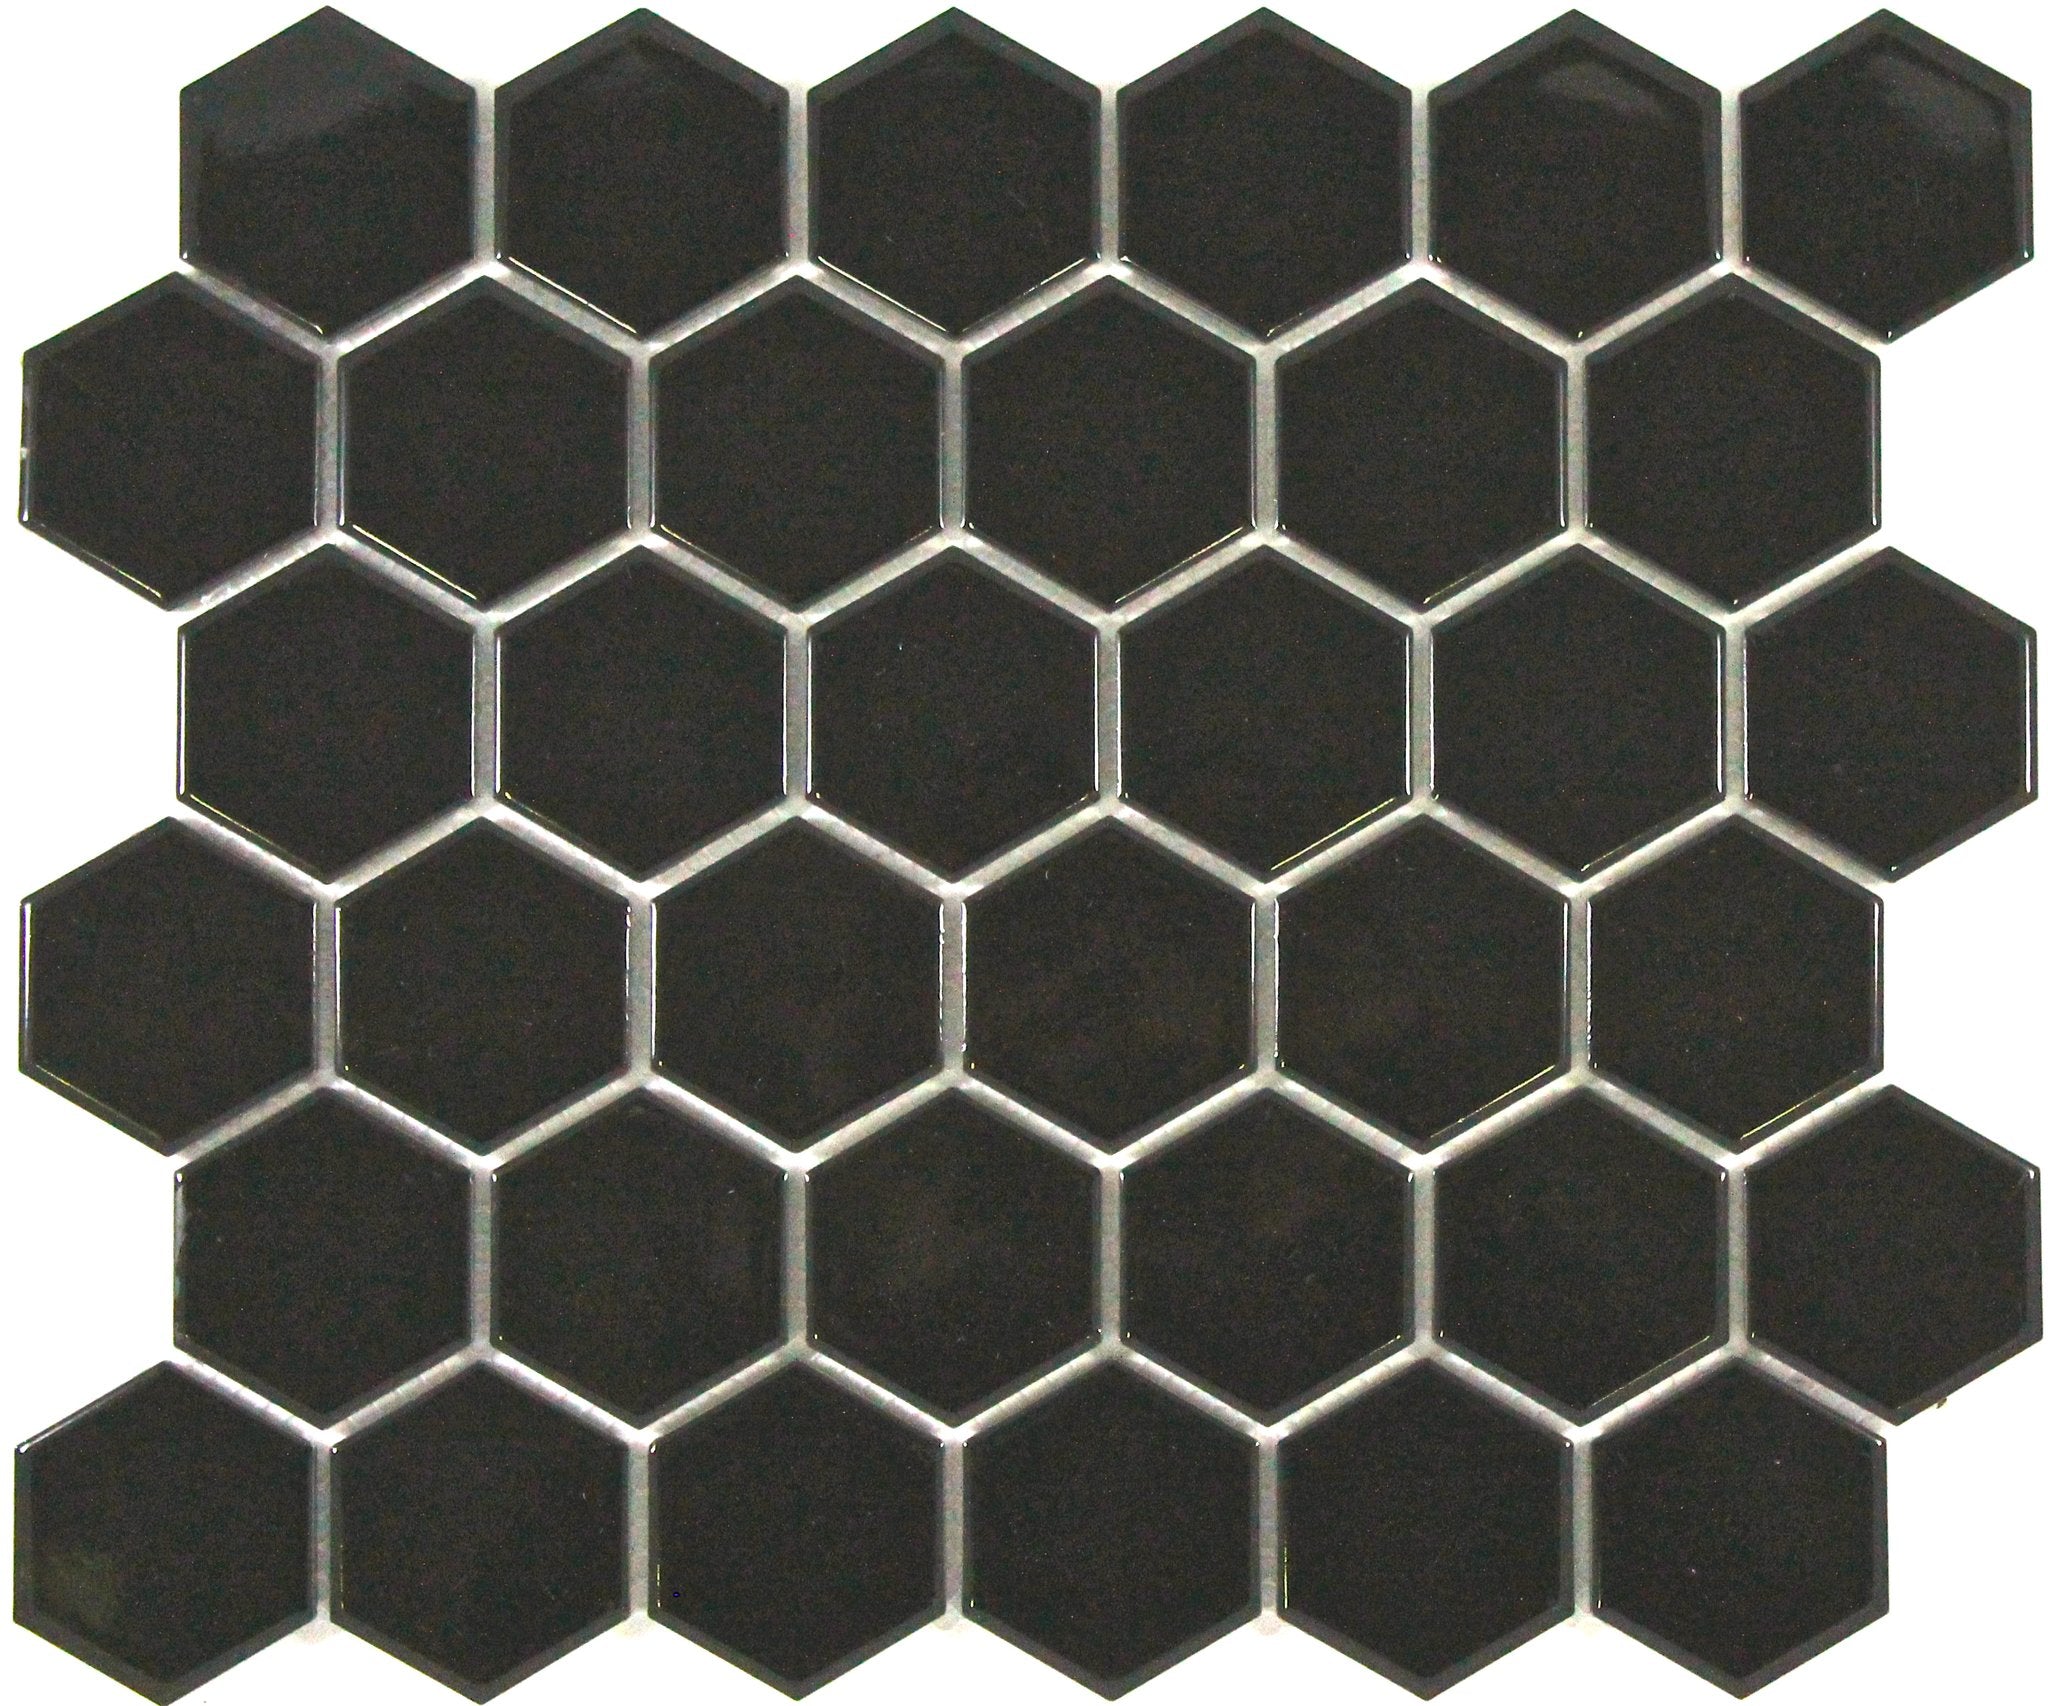 Gloss Black Hexagon Mosaic Tile 51x59mm